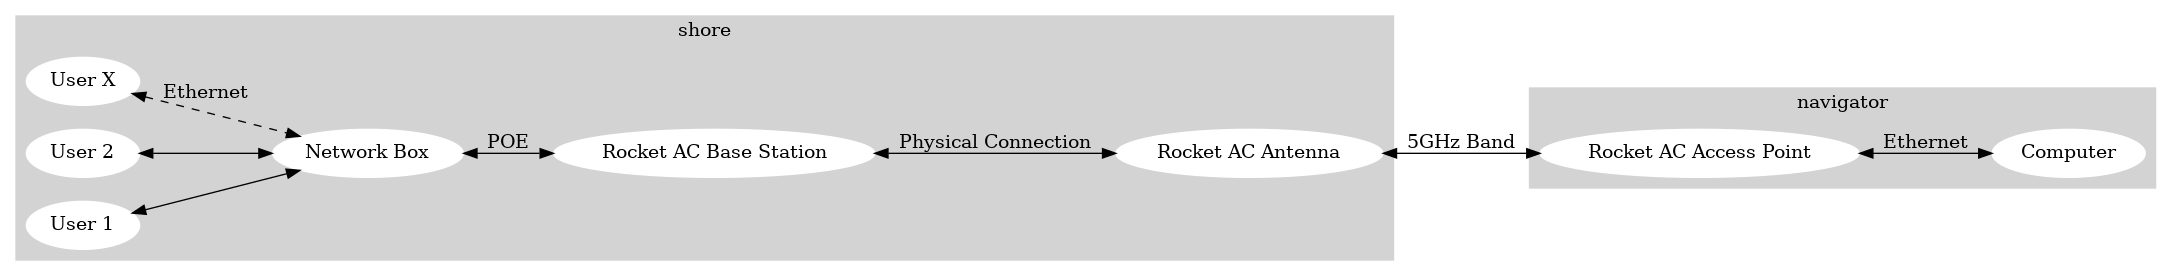 digraph G {
  rankdir=LR

  subgraph cluster_0 {
    style=filled;
    color=lightgrey;
    node [style=filled,color=white];
    a0 [label = "User X"];
    a1 [label = "User 2"];
    a2 [label = "User 1"];
    aa [label = "Network Box"]
    au [label = "Rocket AC Base Station"]
    an [label = "Rocket AC Antenna"]
    label = "shore";
  }

  subgraph cluster_1 {
    style=filled;
    color=lightgrey;
    node [style=filled,color=white];
    n0 [label = "Rocket AC Access Point"]
    n1 [label = "Computer"]
    label = "navigator";
  }

  a0 -> aa [style="dashed", label = "Ethernet", dir=both]
  a1 -> aa [dir=both]
  a2 -> aa [dir=both]
  aa -> au [dir=both, label = "POE"]
  au -> an [dir=both, label = "Physical Connection"]

  n0 -> n1 [label = "Ethernet", dir=both]

  an -> n0 [dir = both, label = "5GHz Band"]
}